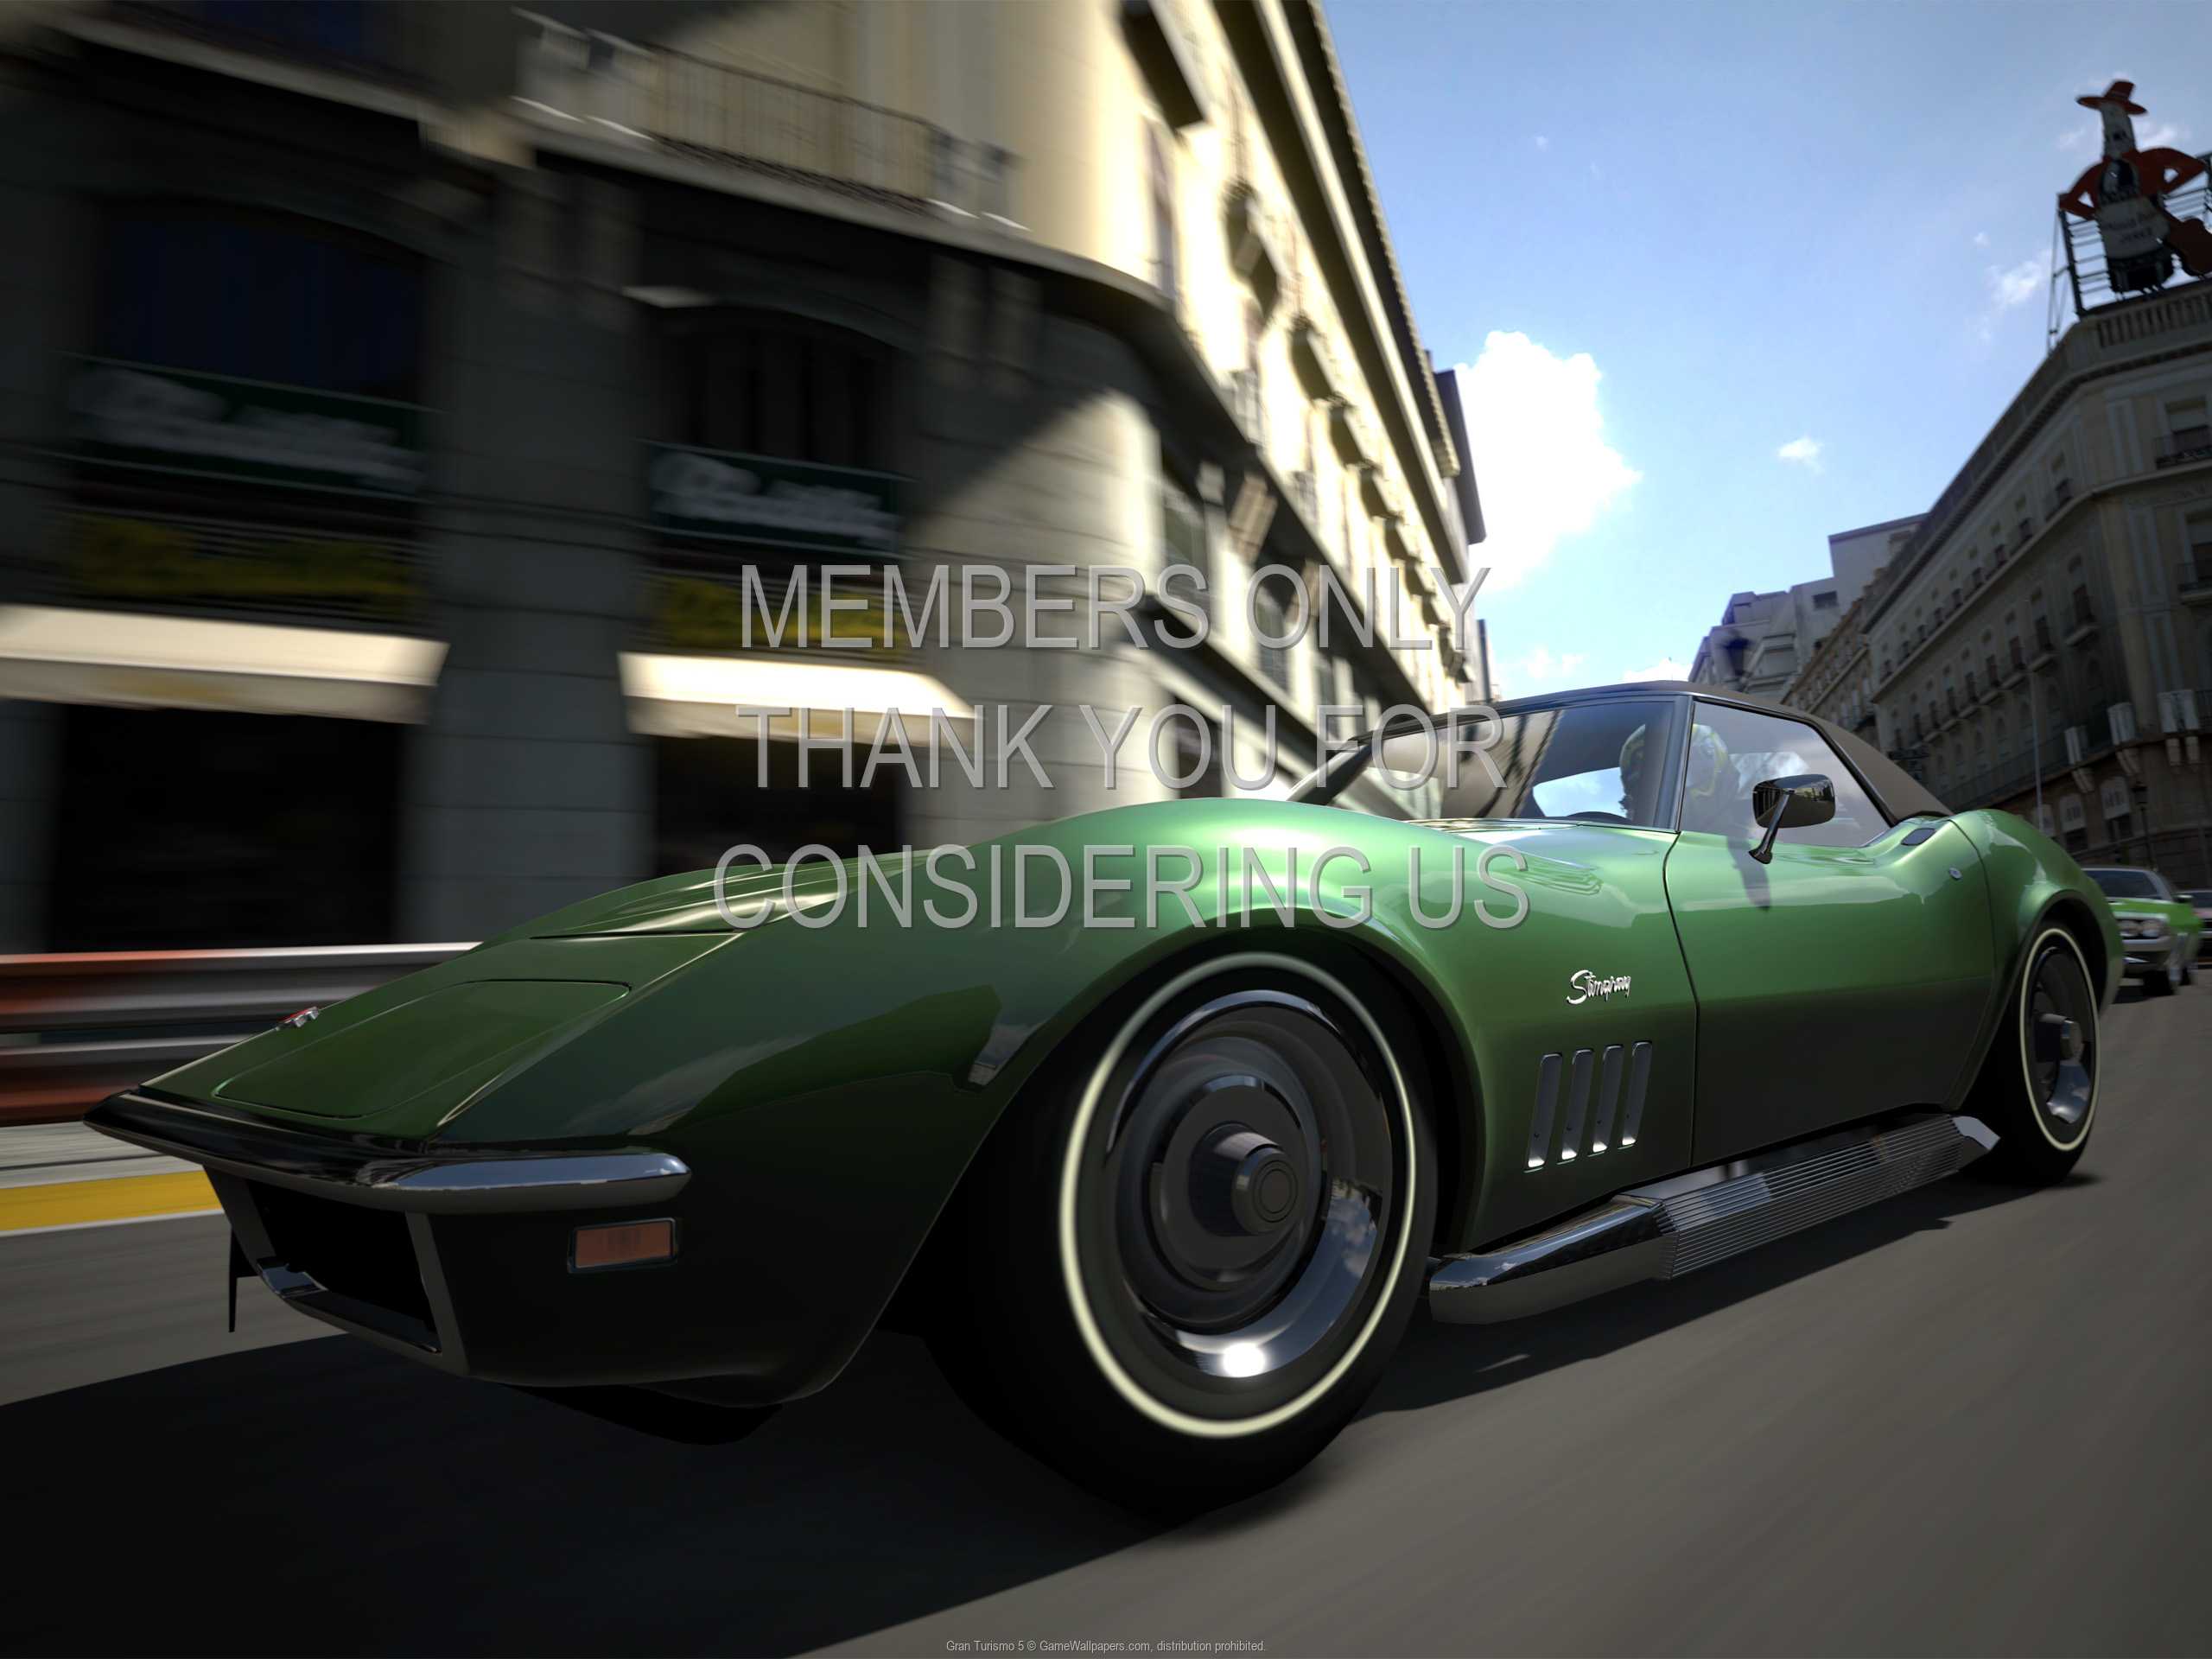 Gran Turismo 5 1080p%20Horizontal Mobile wallpaper or background 15